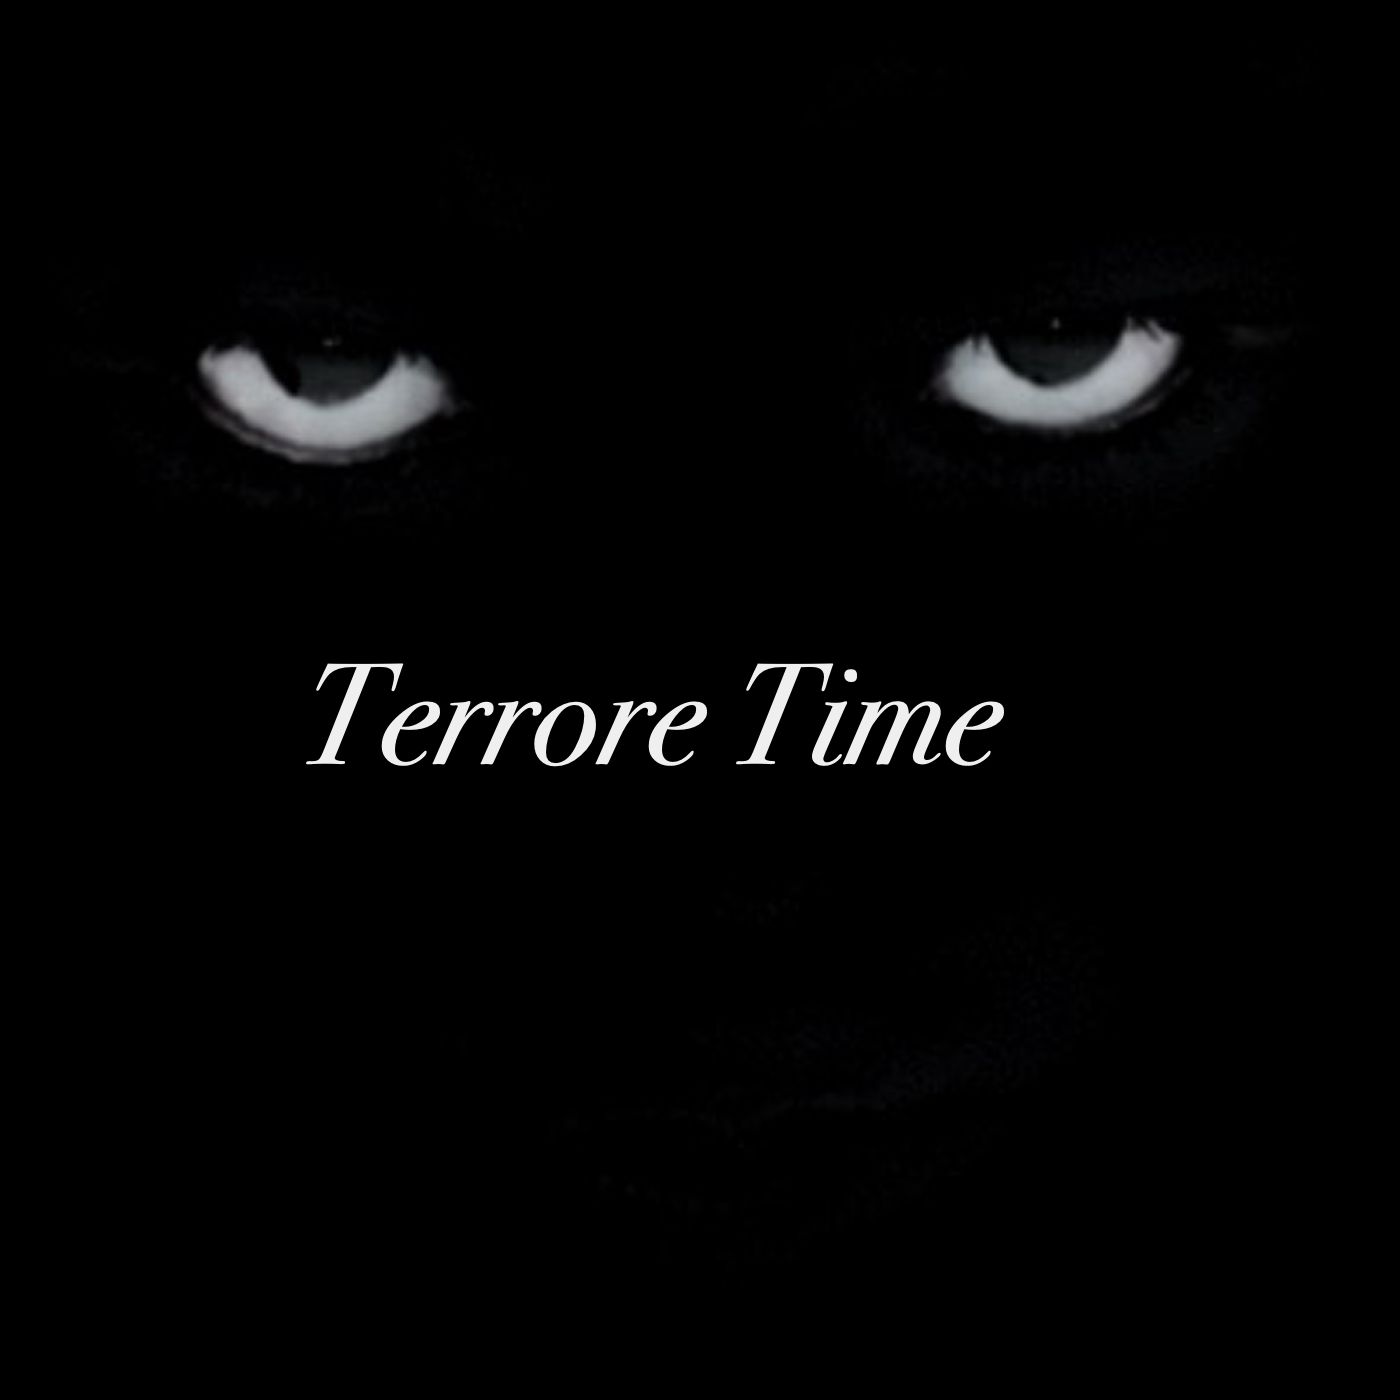 Terrore time